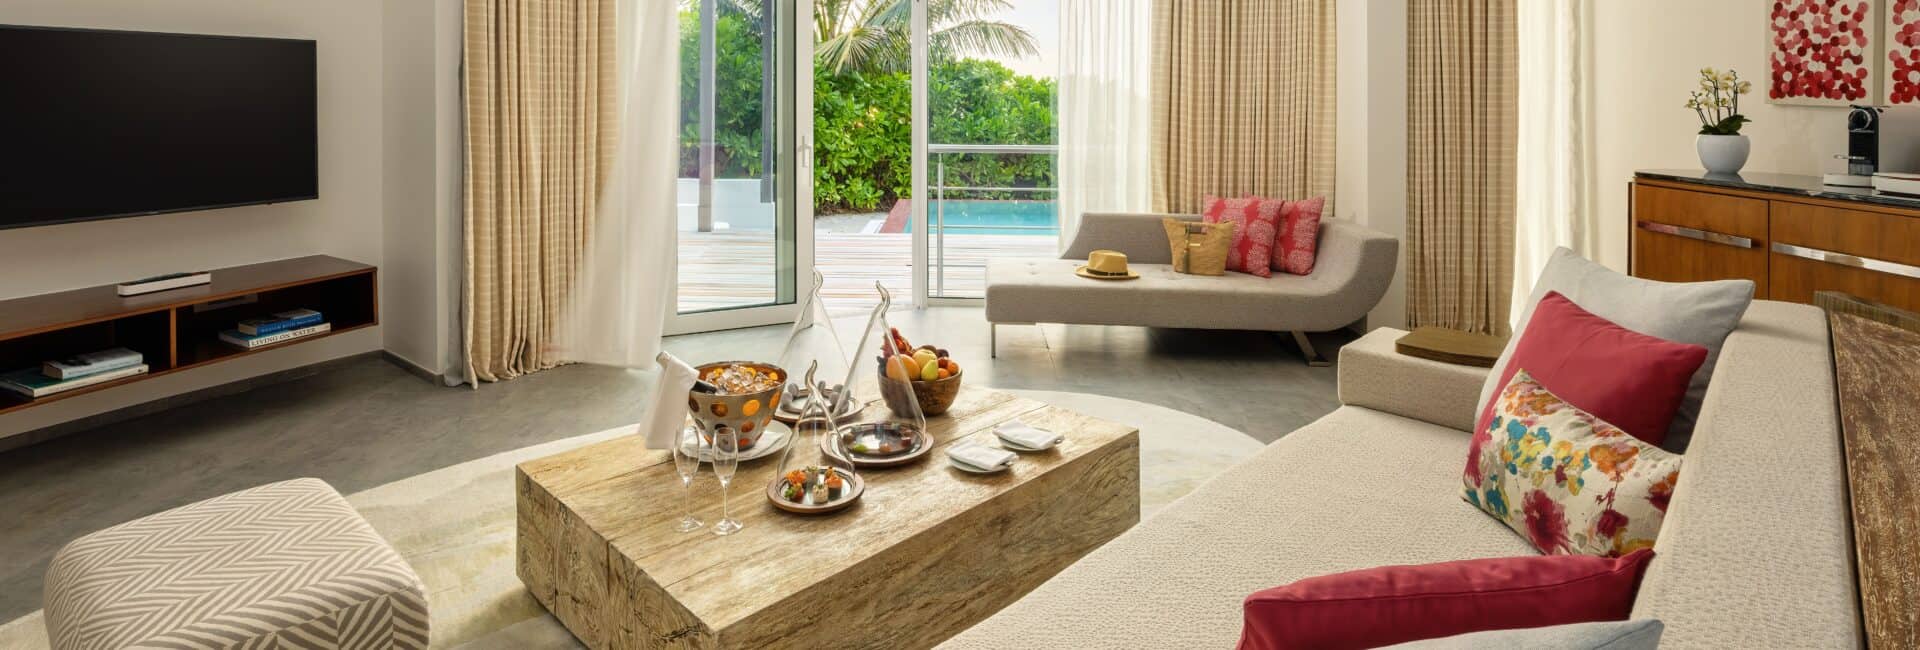 Jumeirah Maldives_High_resolution_300dpi-Jumeirah Maldives - Beach Villa with Pool - Living Room